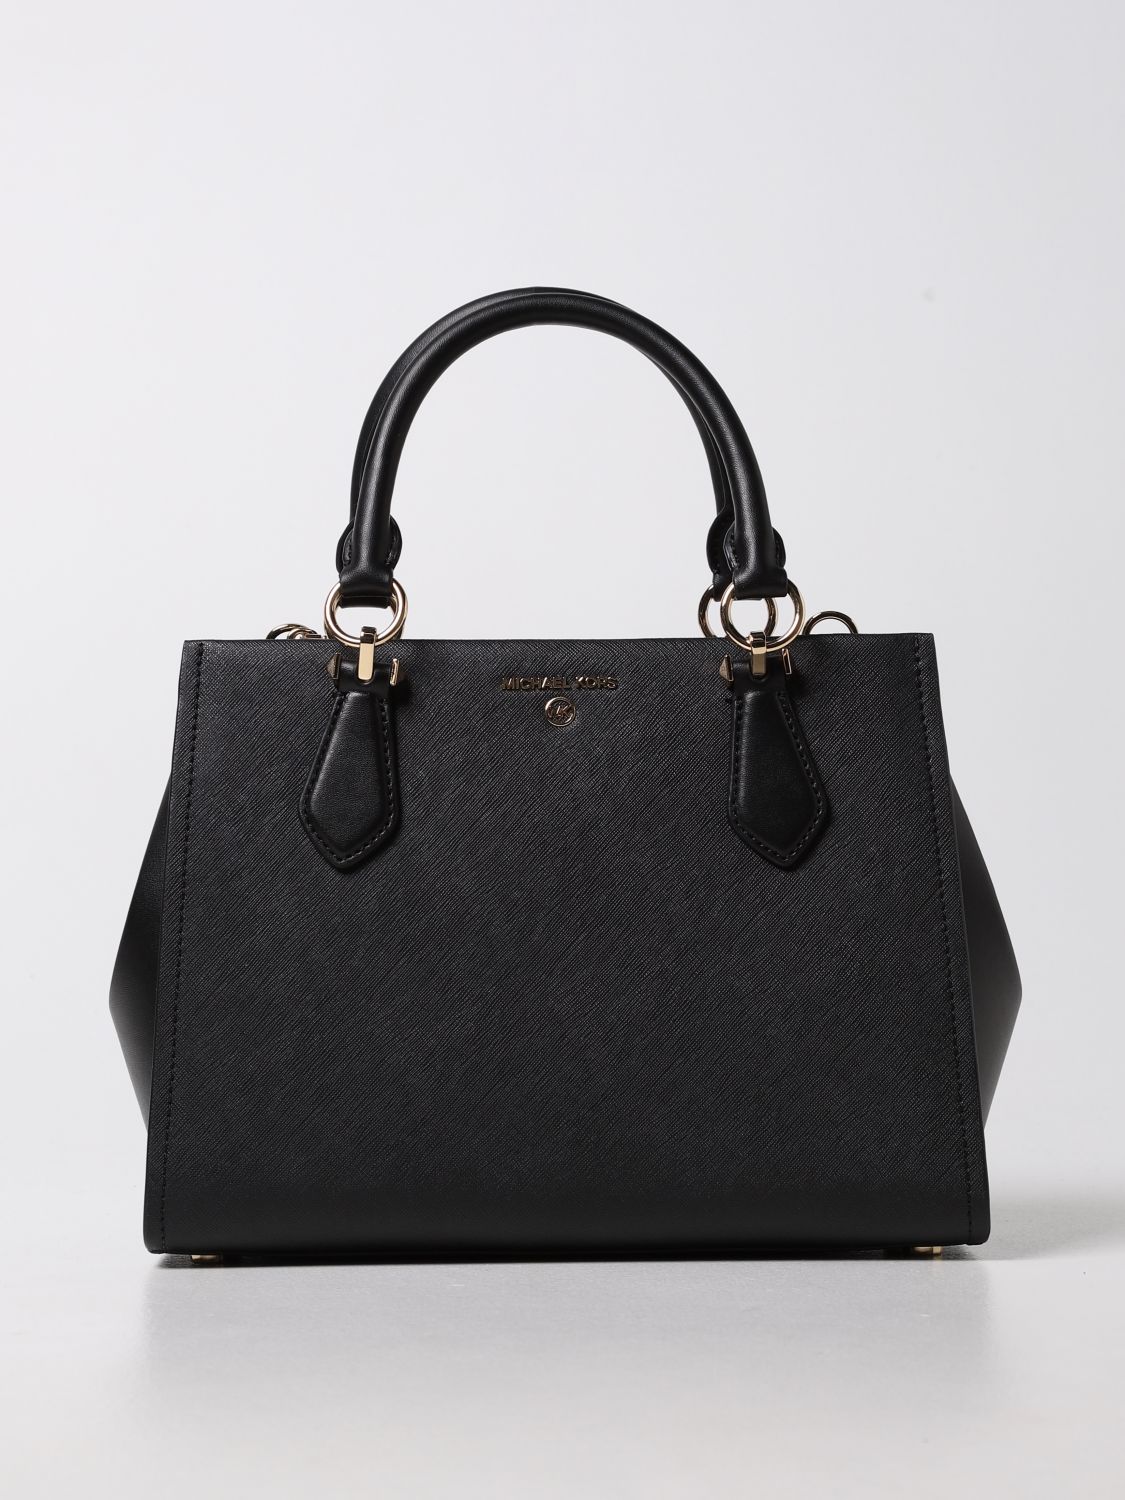 Michael Kors - Authenticated Handbag - Leather Black Plain for Women, Never Worn